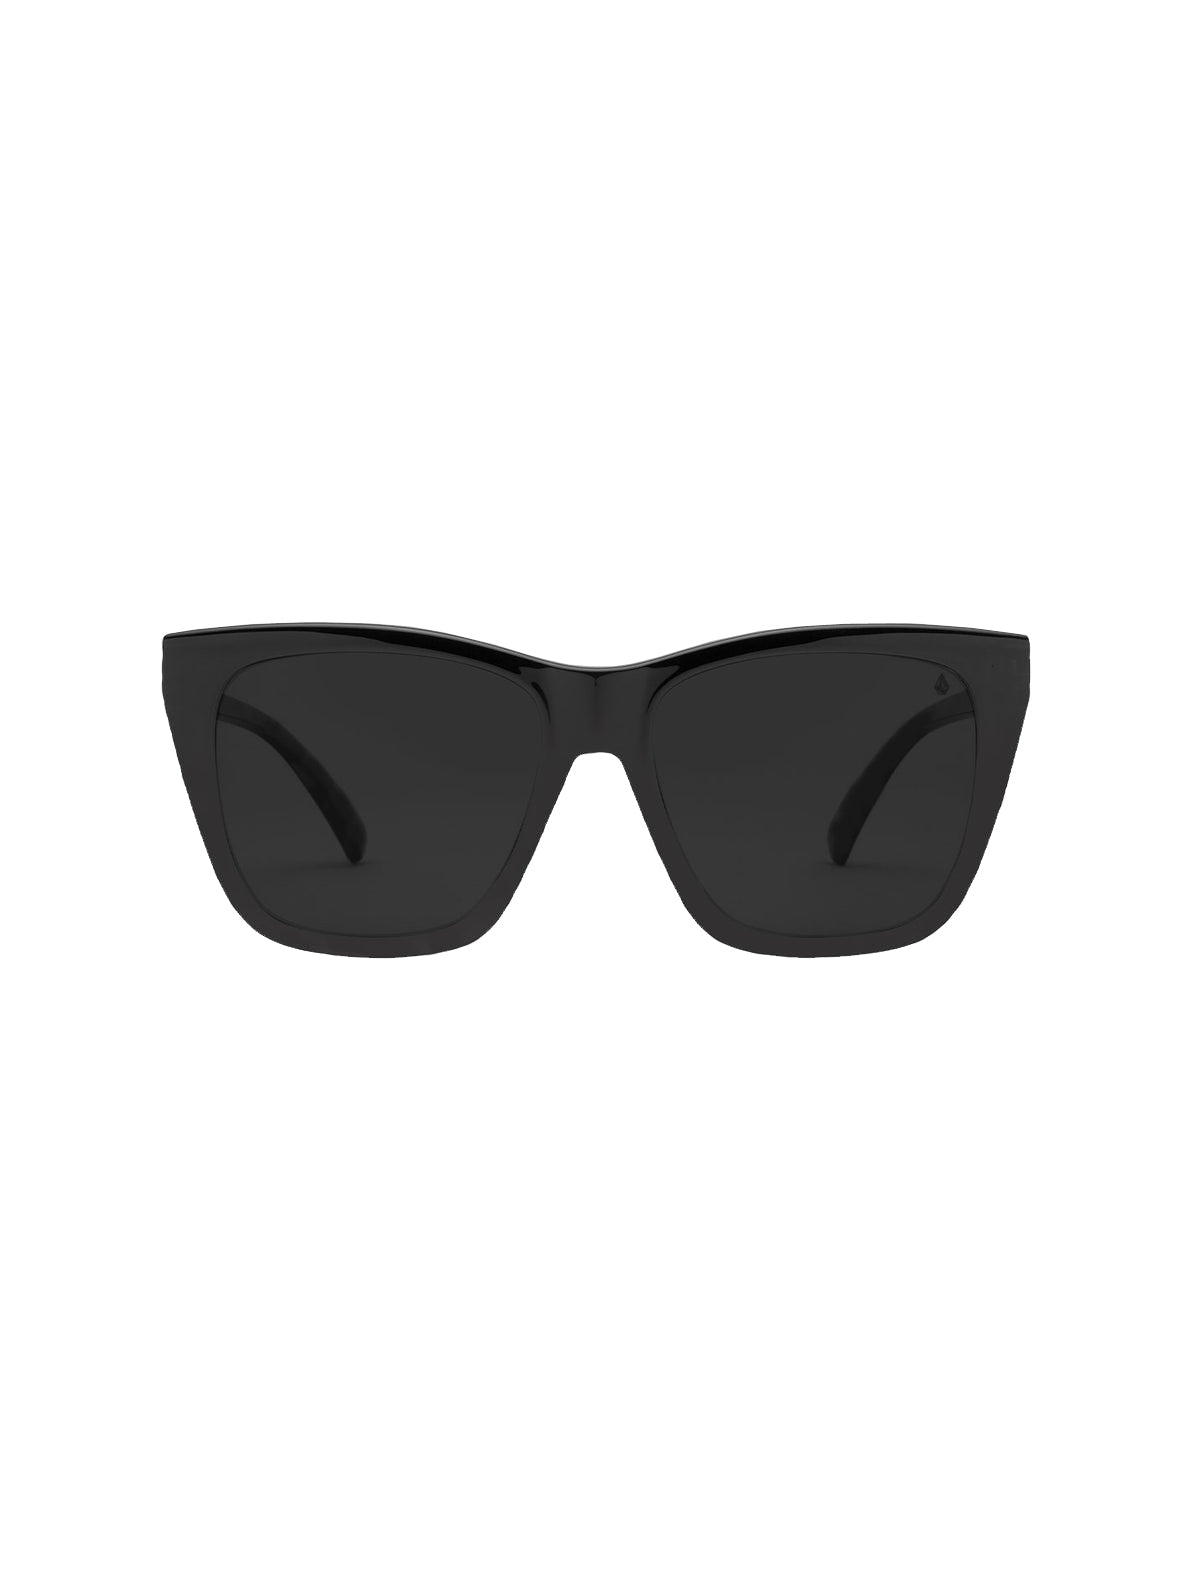 Volcom LookyLou Sunglasses Black Gray